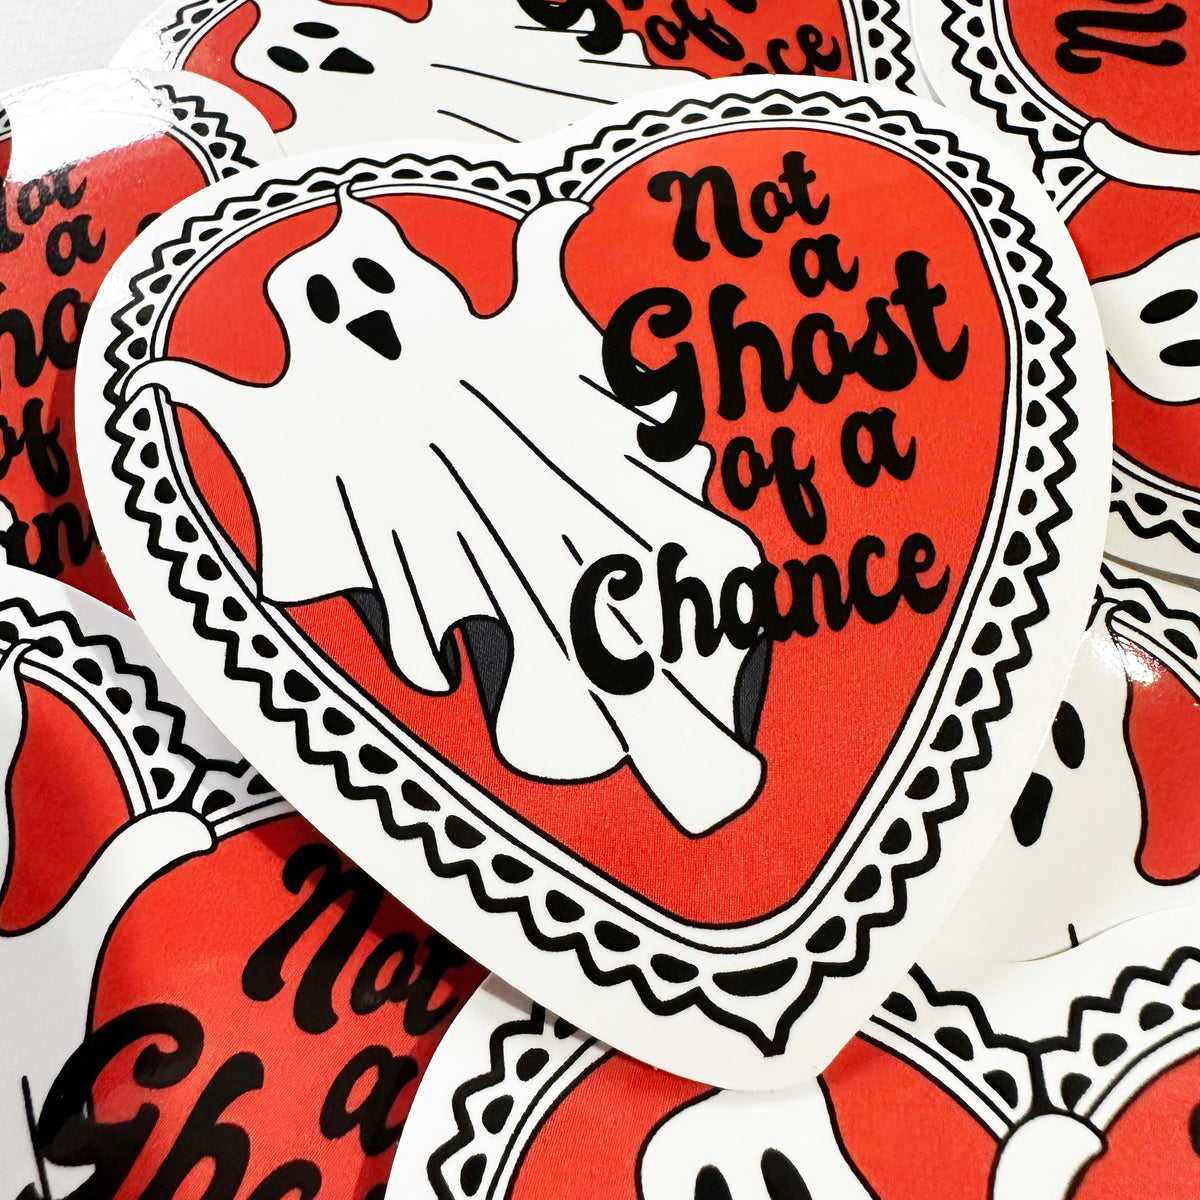 Not A Chance Ghost Sticker